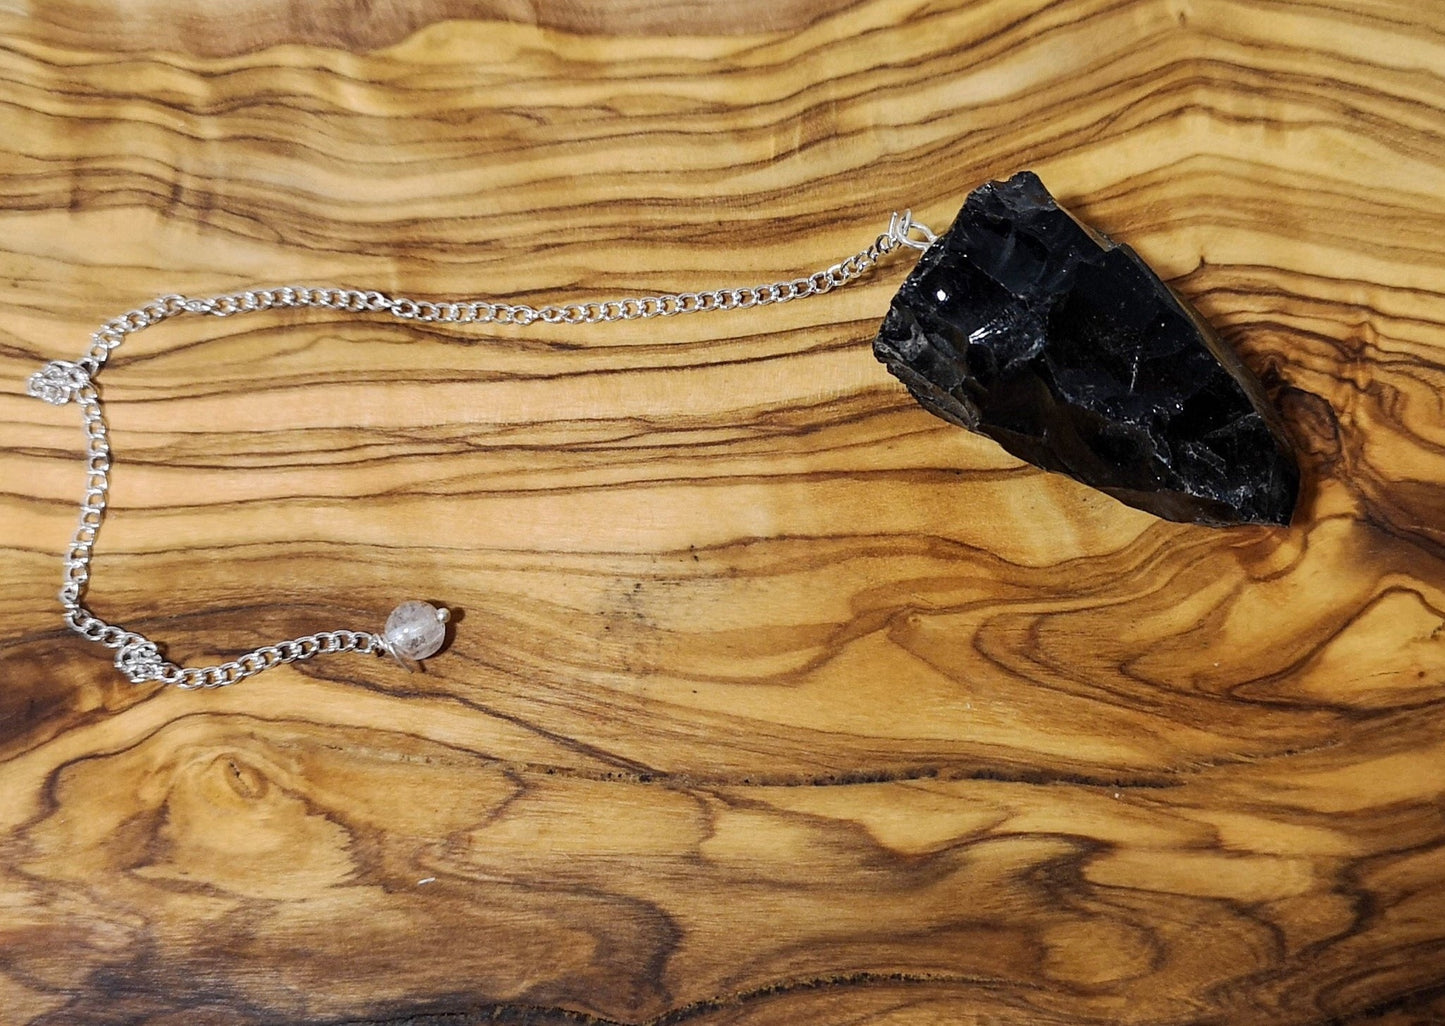 Rough black obsidian pendulum